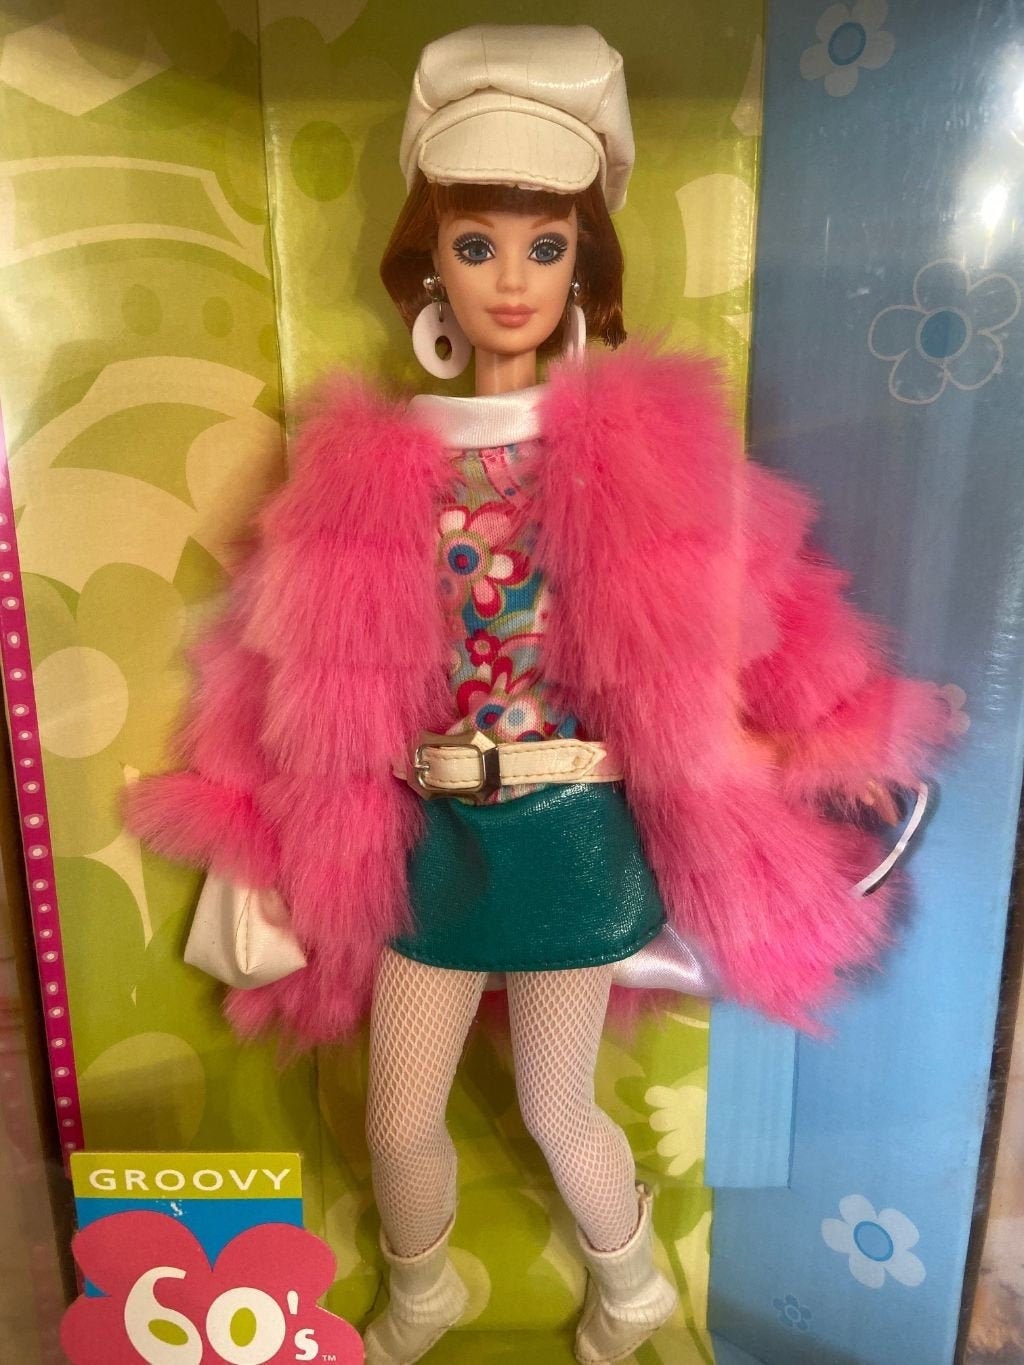 Jurassic Park Vermoorden Toepassen Vintage Mod Barbie Collectors Edition. Groovy 60's Barbie - Etsy